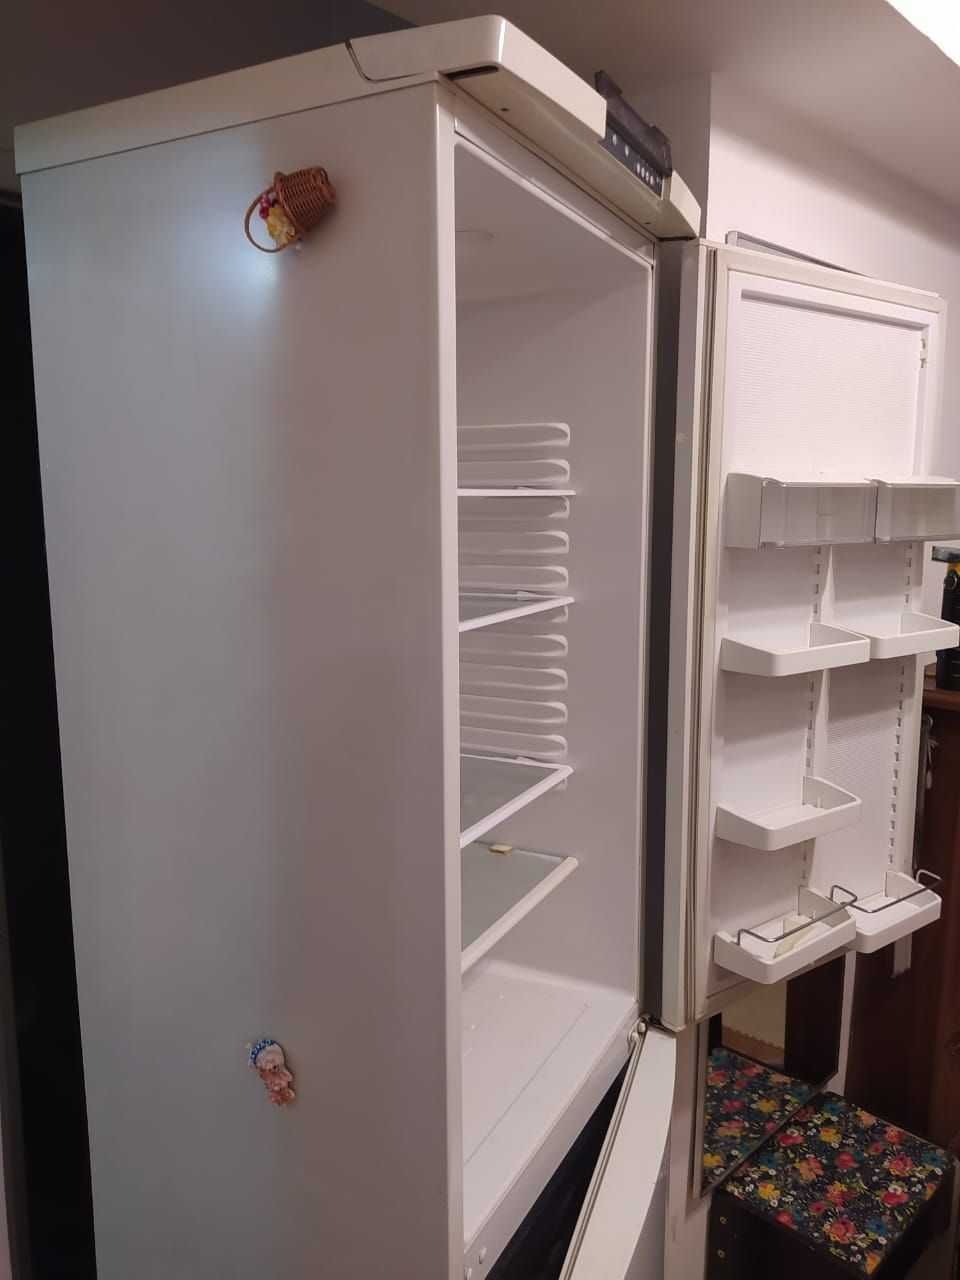 Продам Холодильник БУ - Атлант.